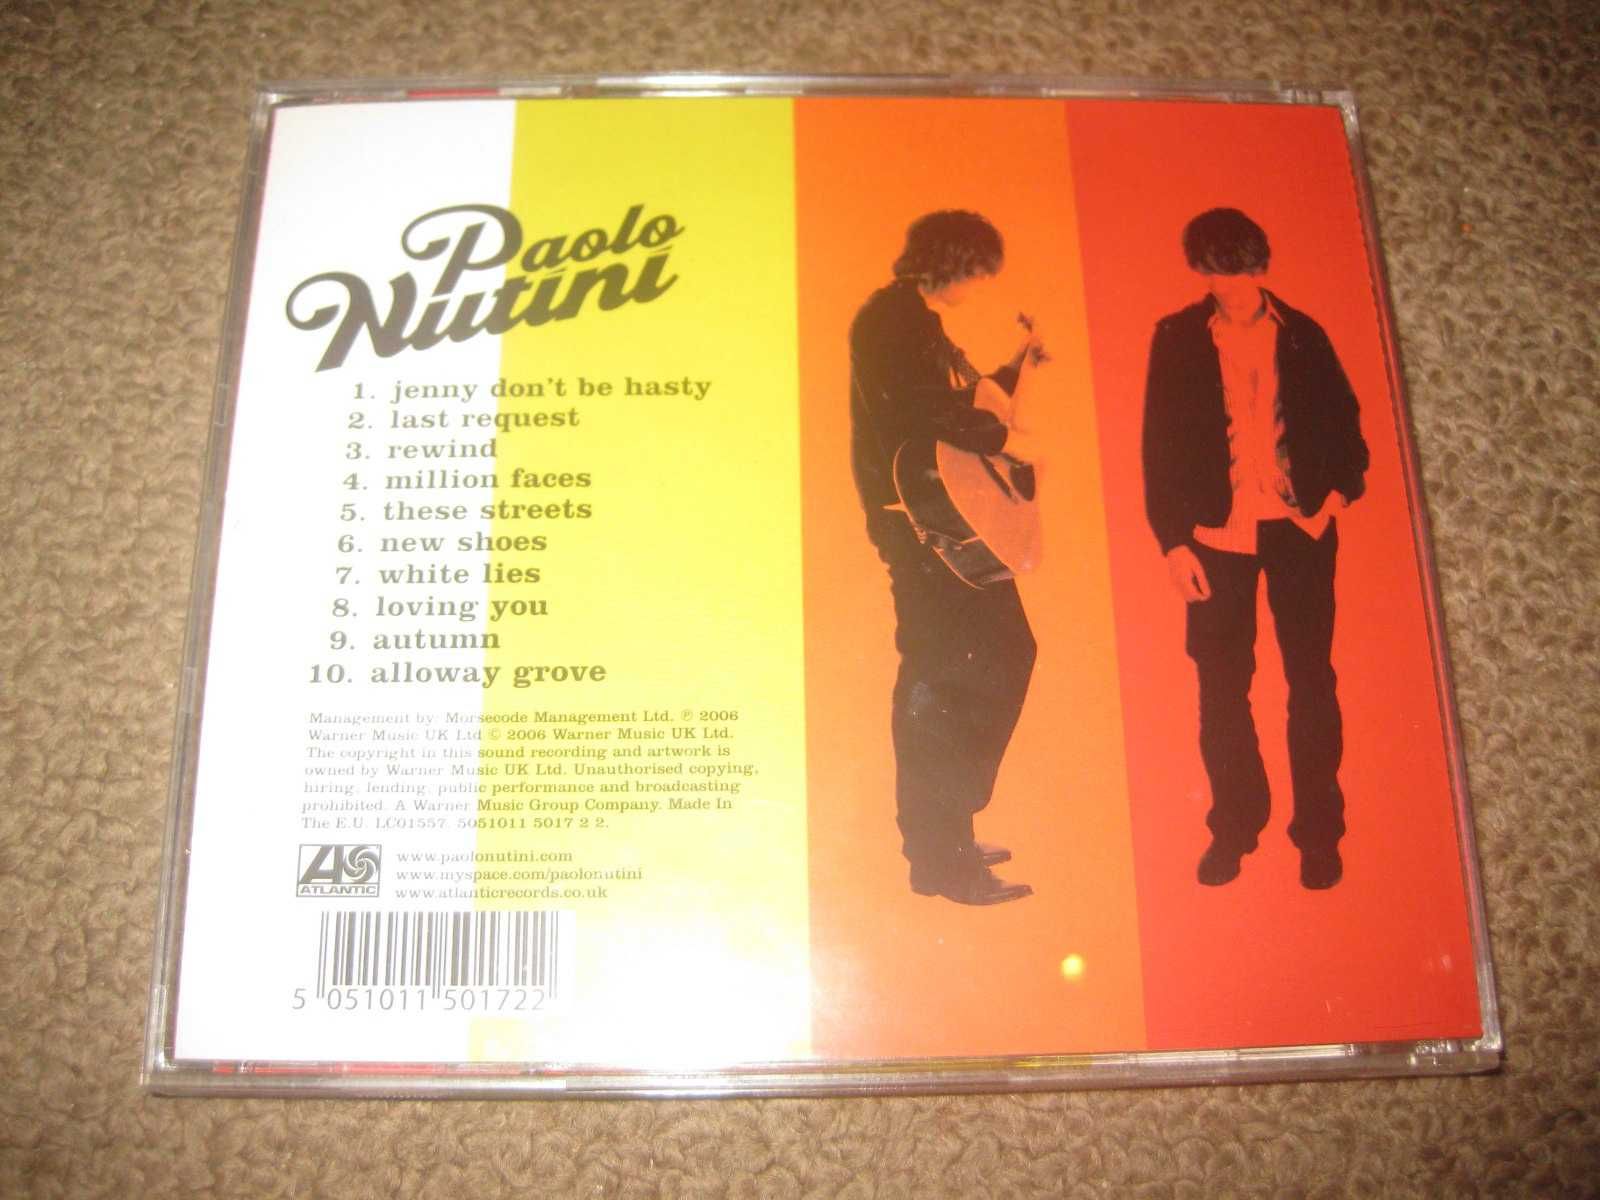 CD do Paolo Nutini "These Streets" Portes Grátis!